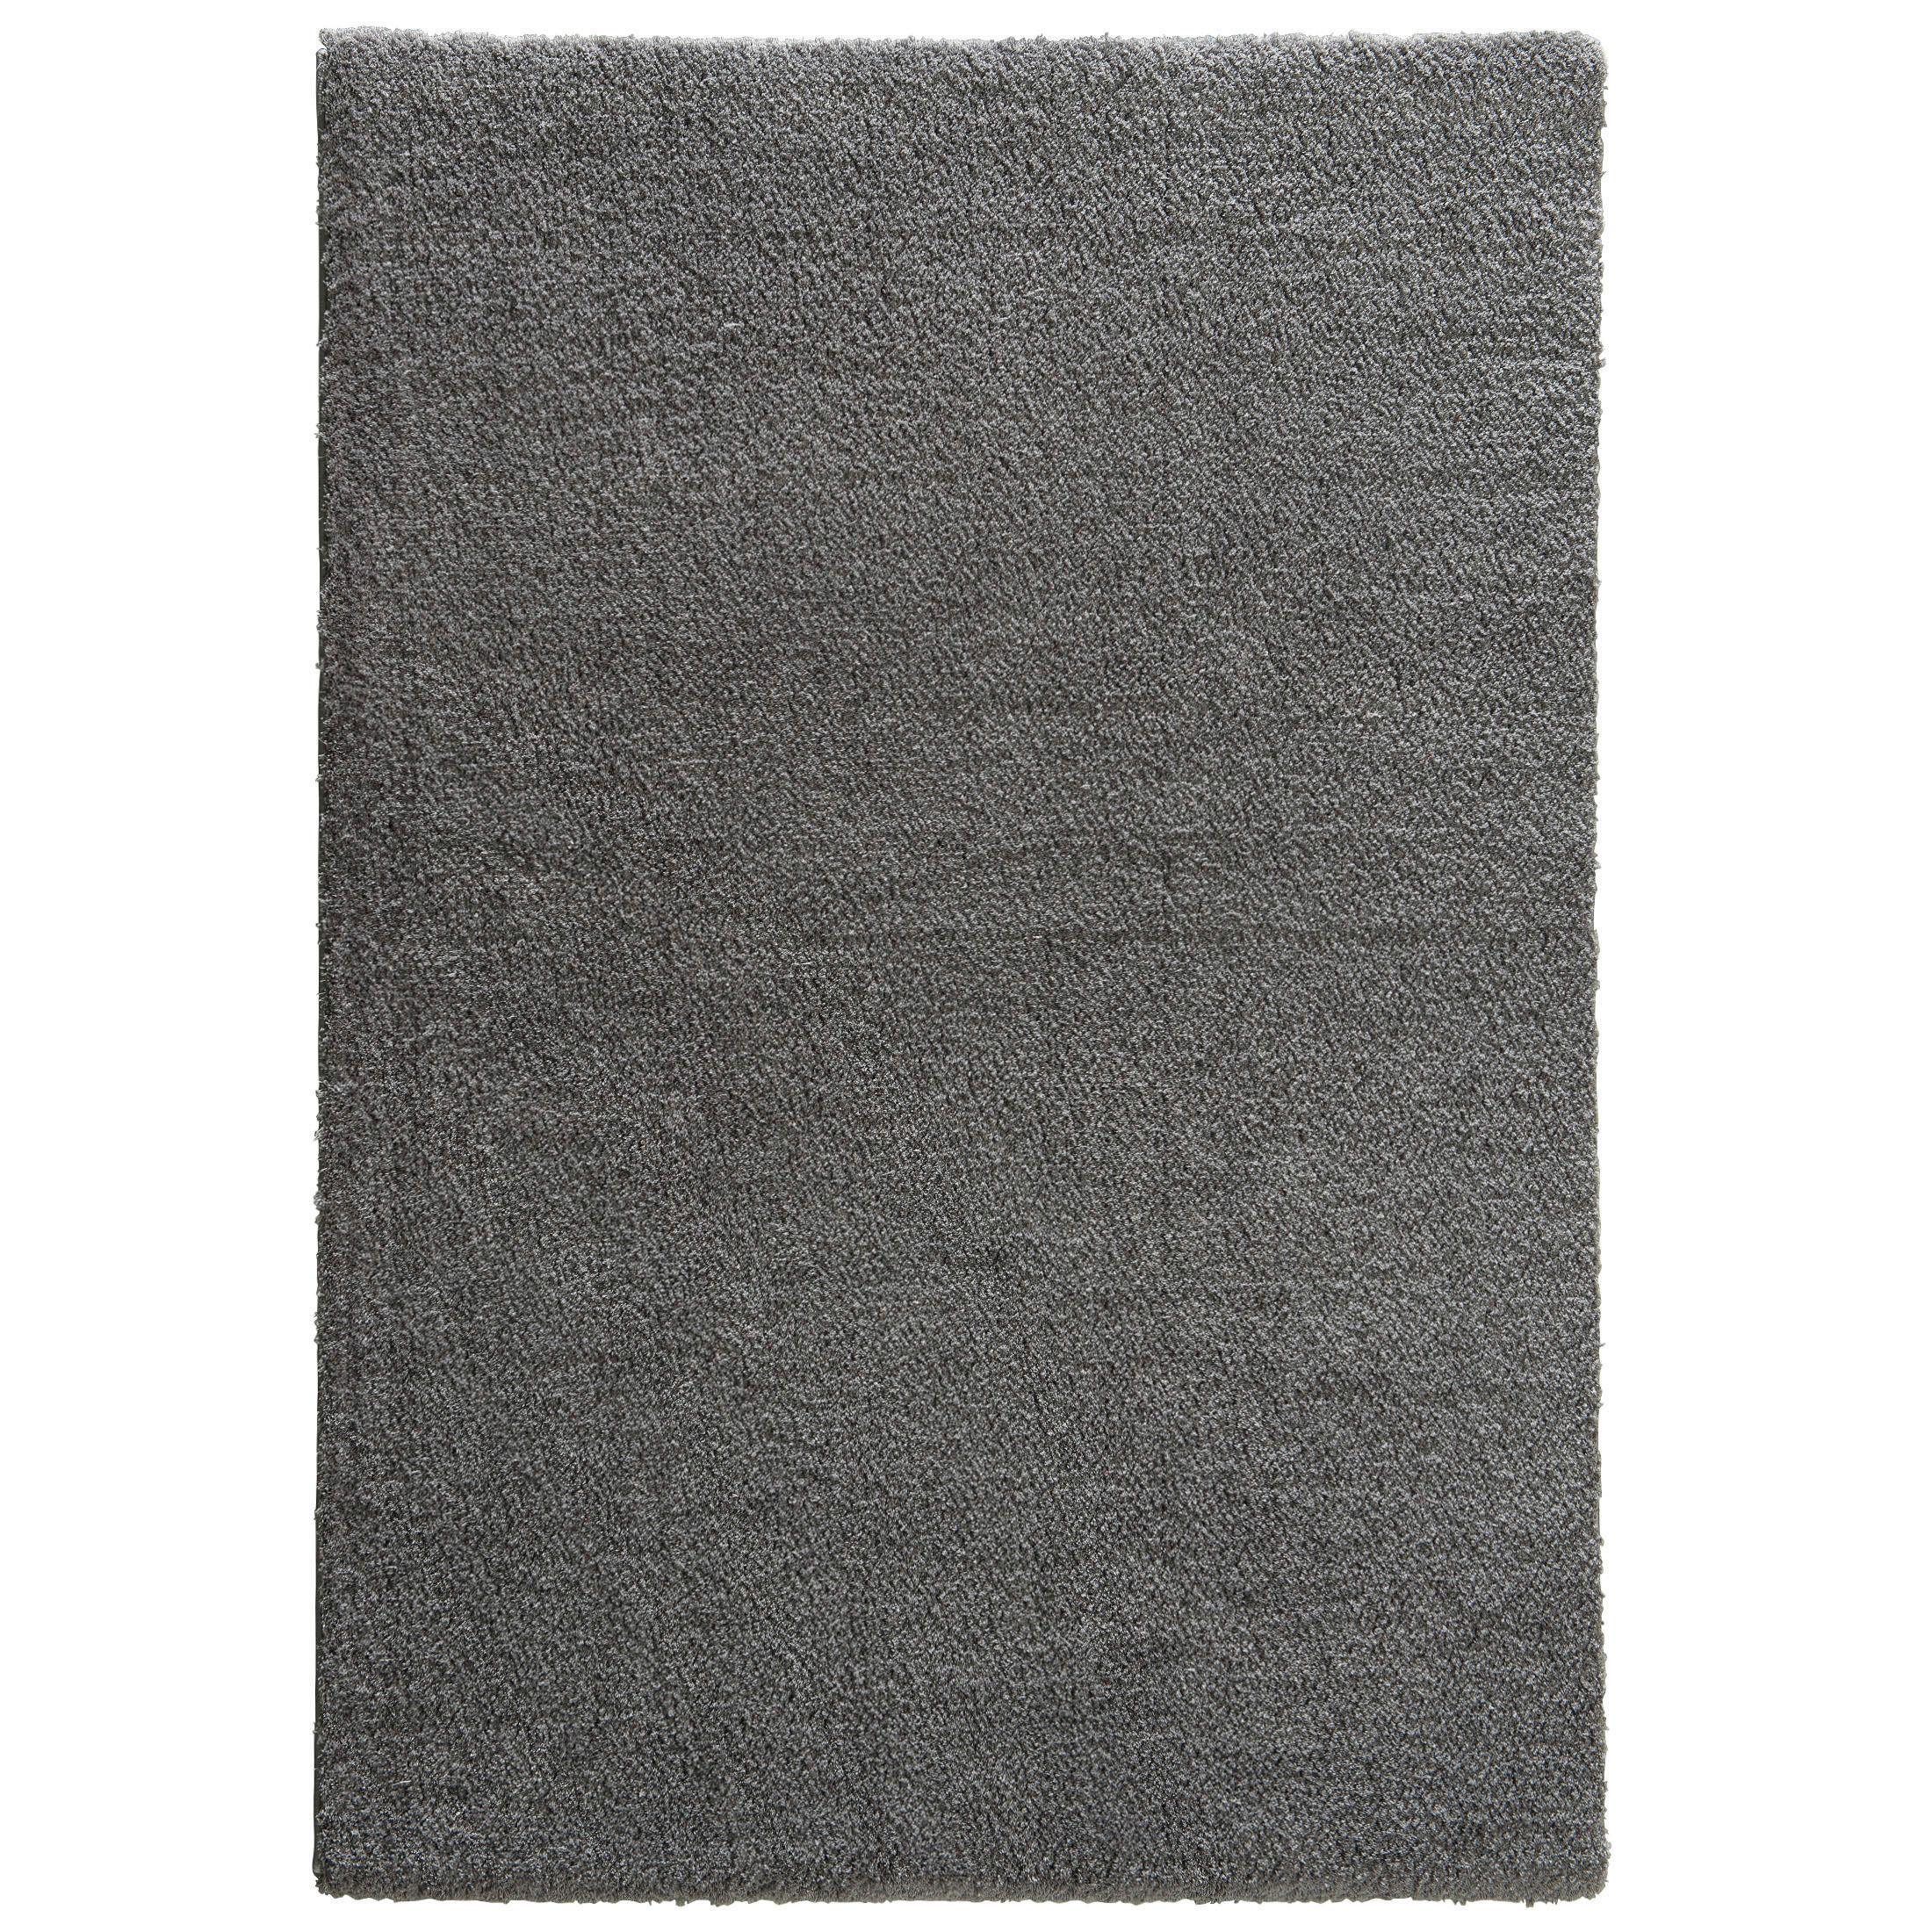 HOCHFLORTEPPICH 67/130 cm New Livorno  - Grau, Basics, Textil (67/130cm) - Novel